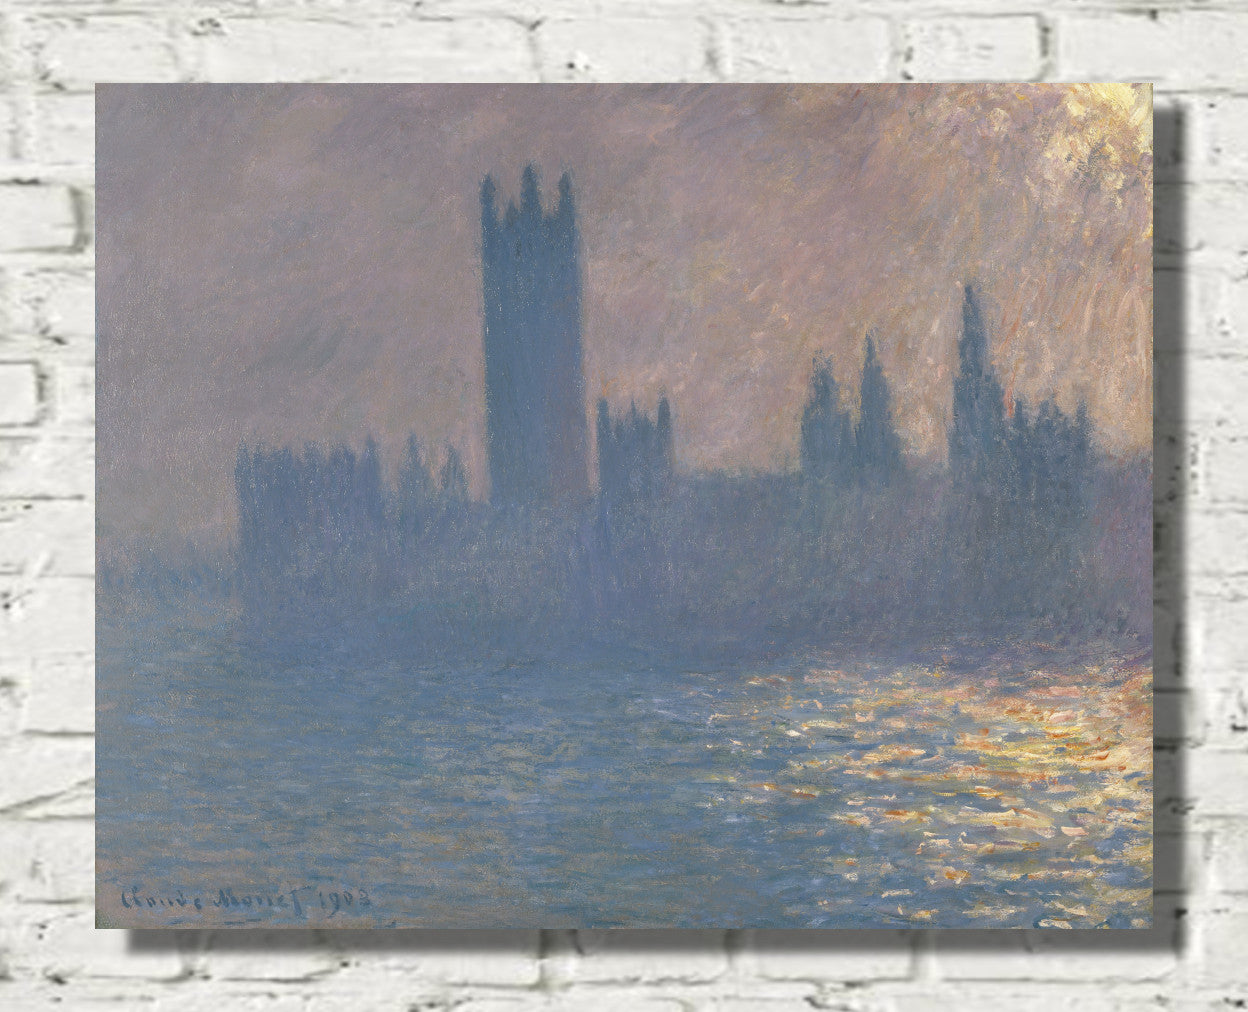 Houses of Parliament, Sunlight Effect by Claude Monet